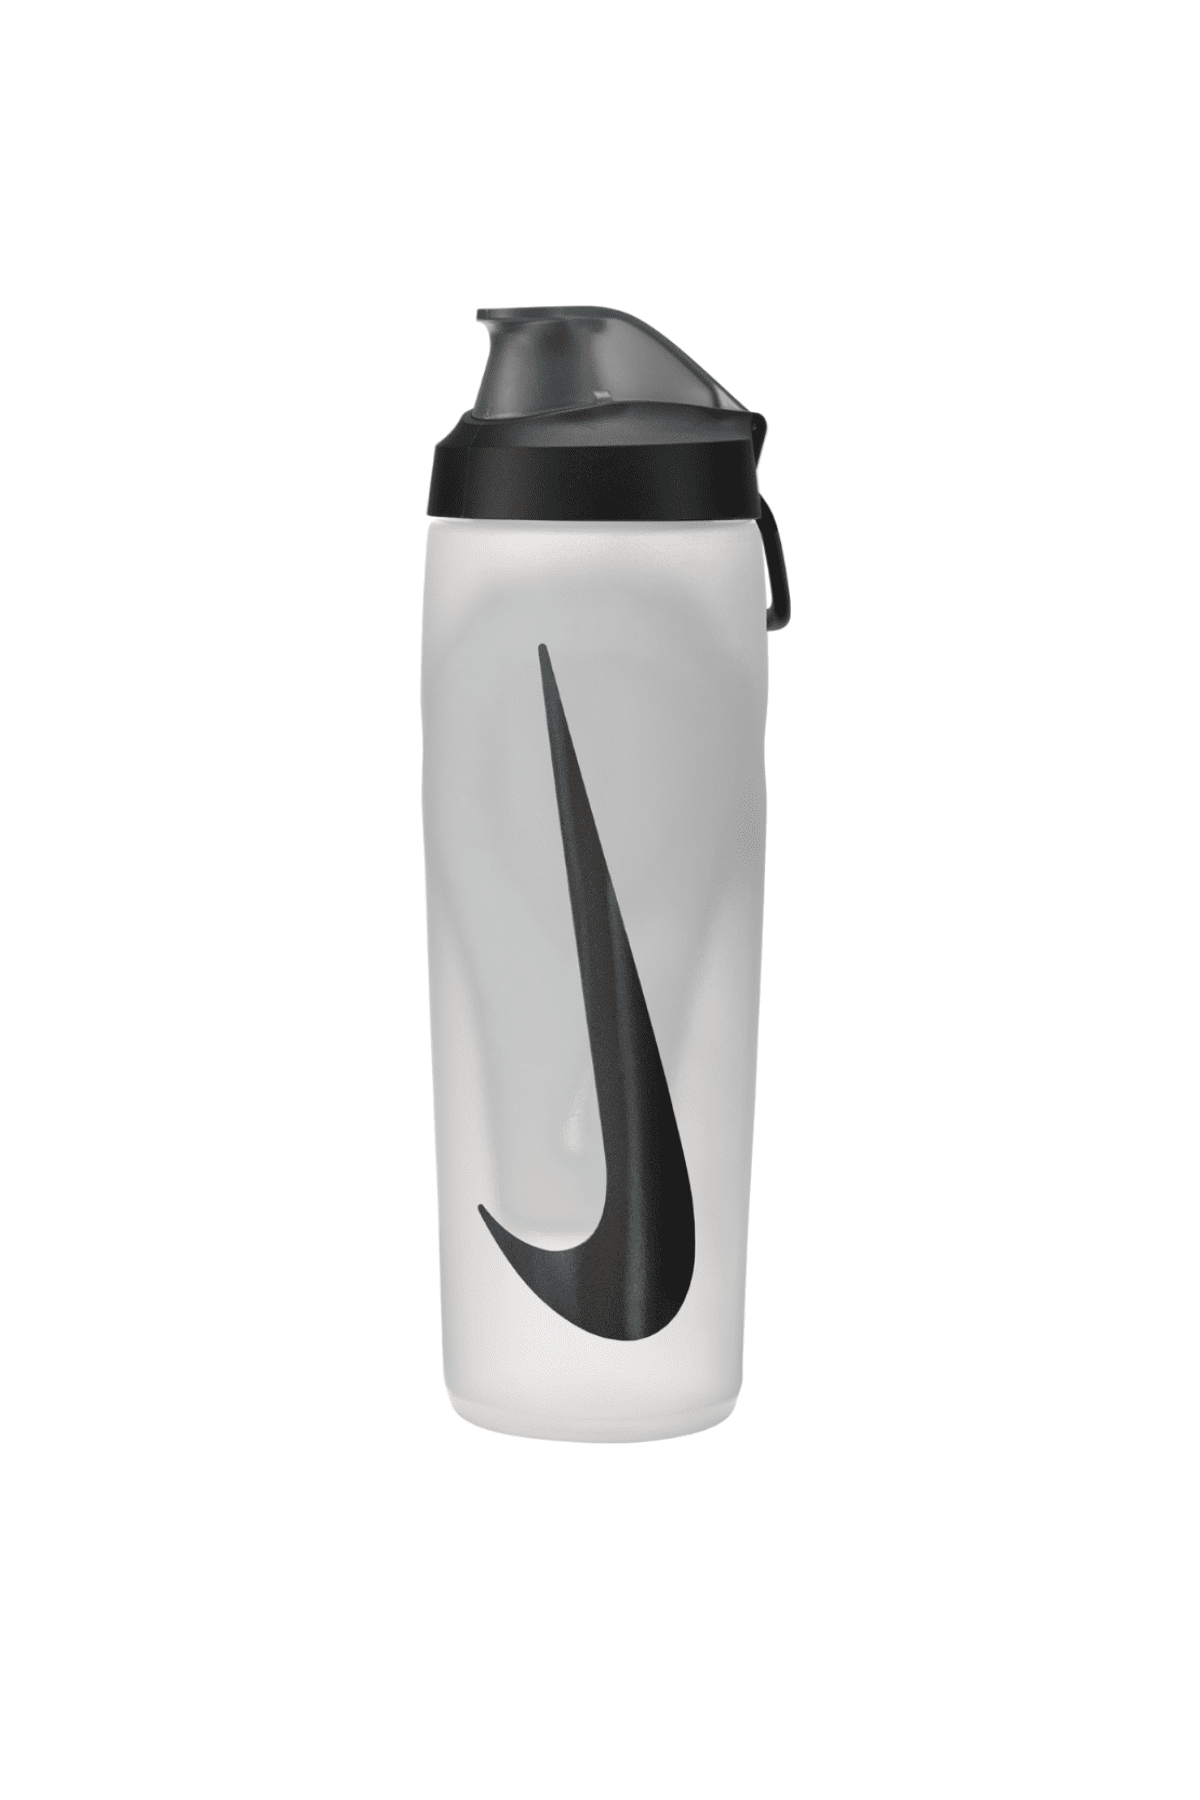 NIKE REFUEL בקבוק מים - בקבוק ספורט עם מכסה נייק 700 מ"ל שקוף-Nike-One size-נאקו